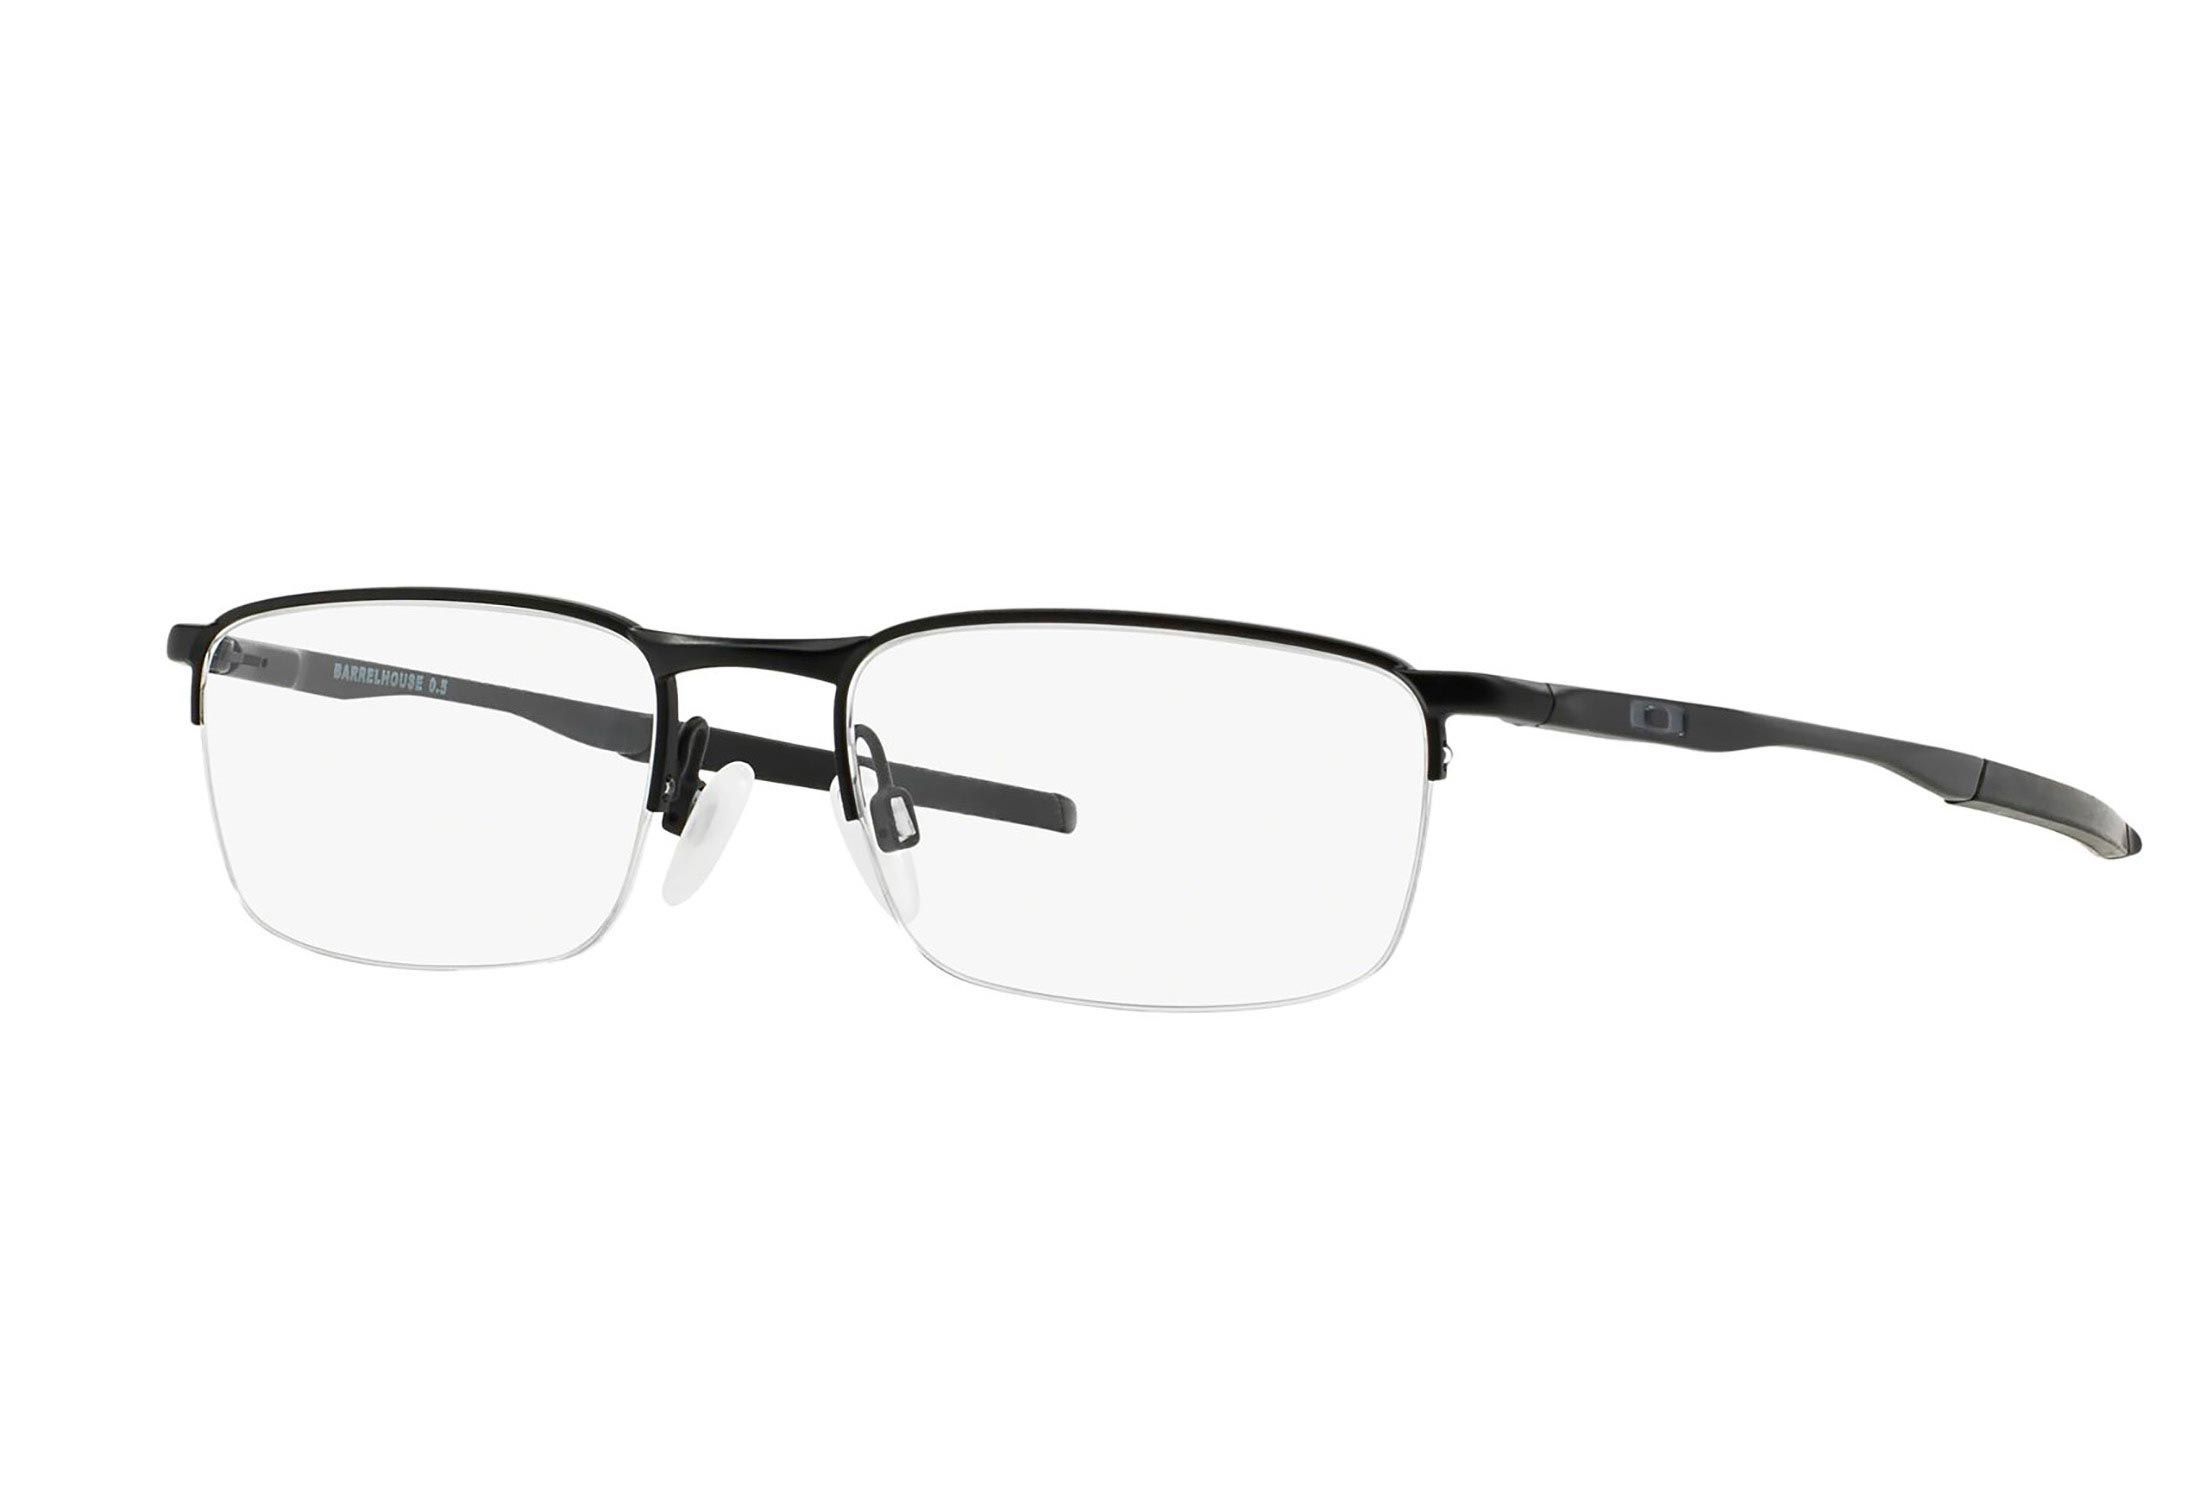 Oakley briller - Barrelhouse 0.5 - Svart, Medium Halv ramme i Metall - Rektangulære